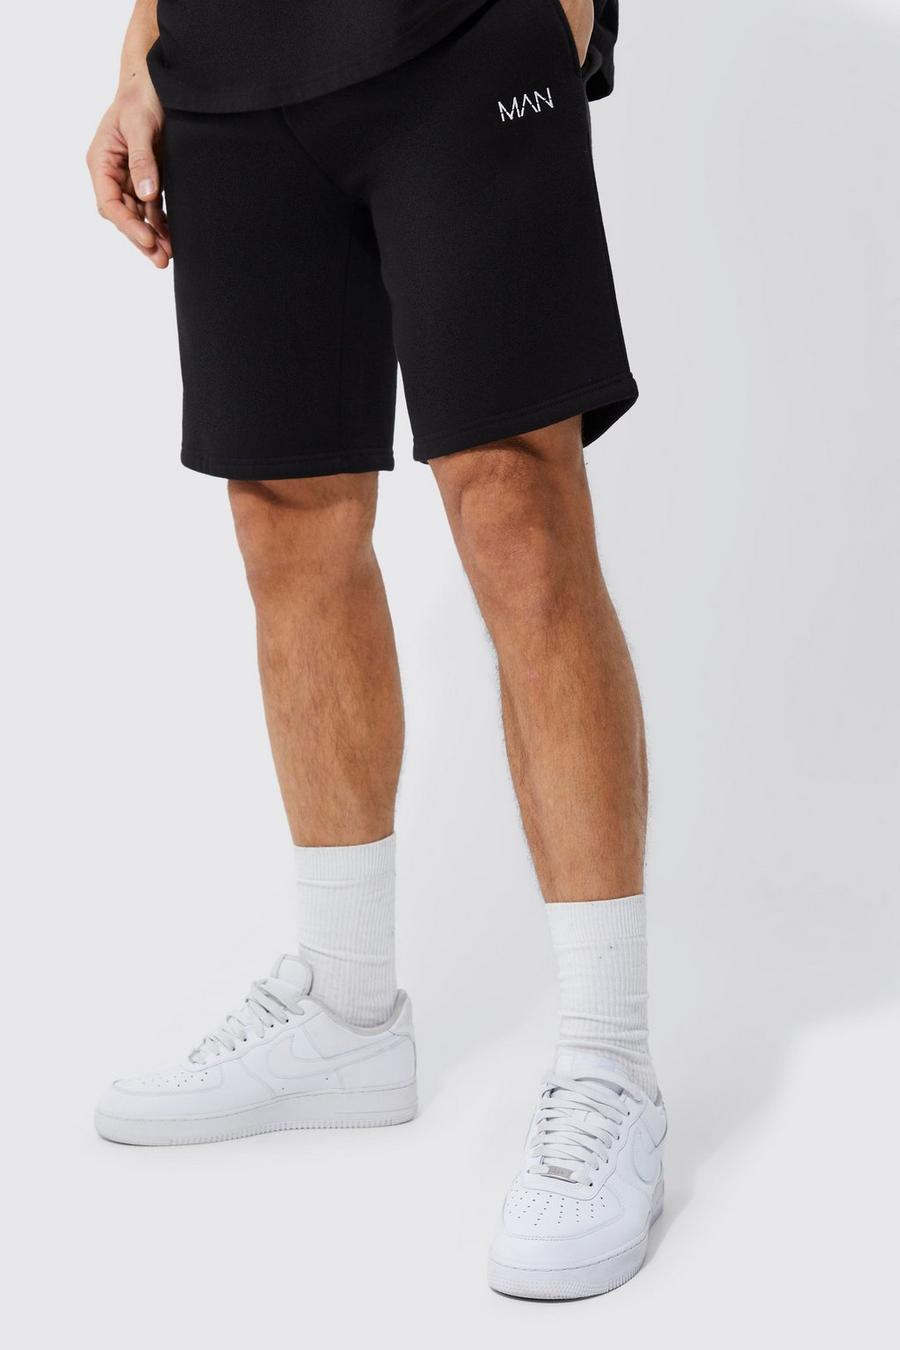 Tall lockere Man Jersey-Shorts, Black noir